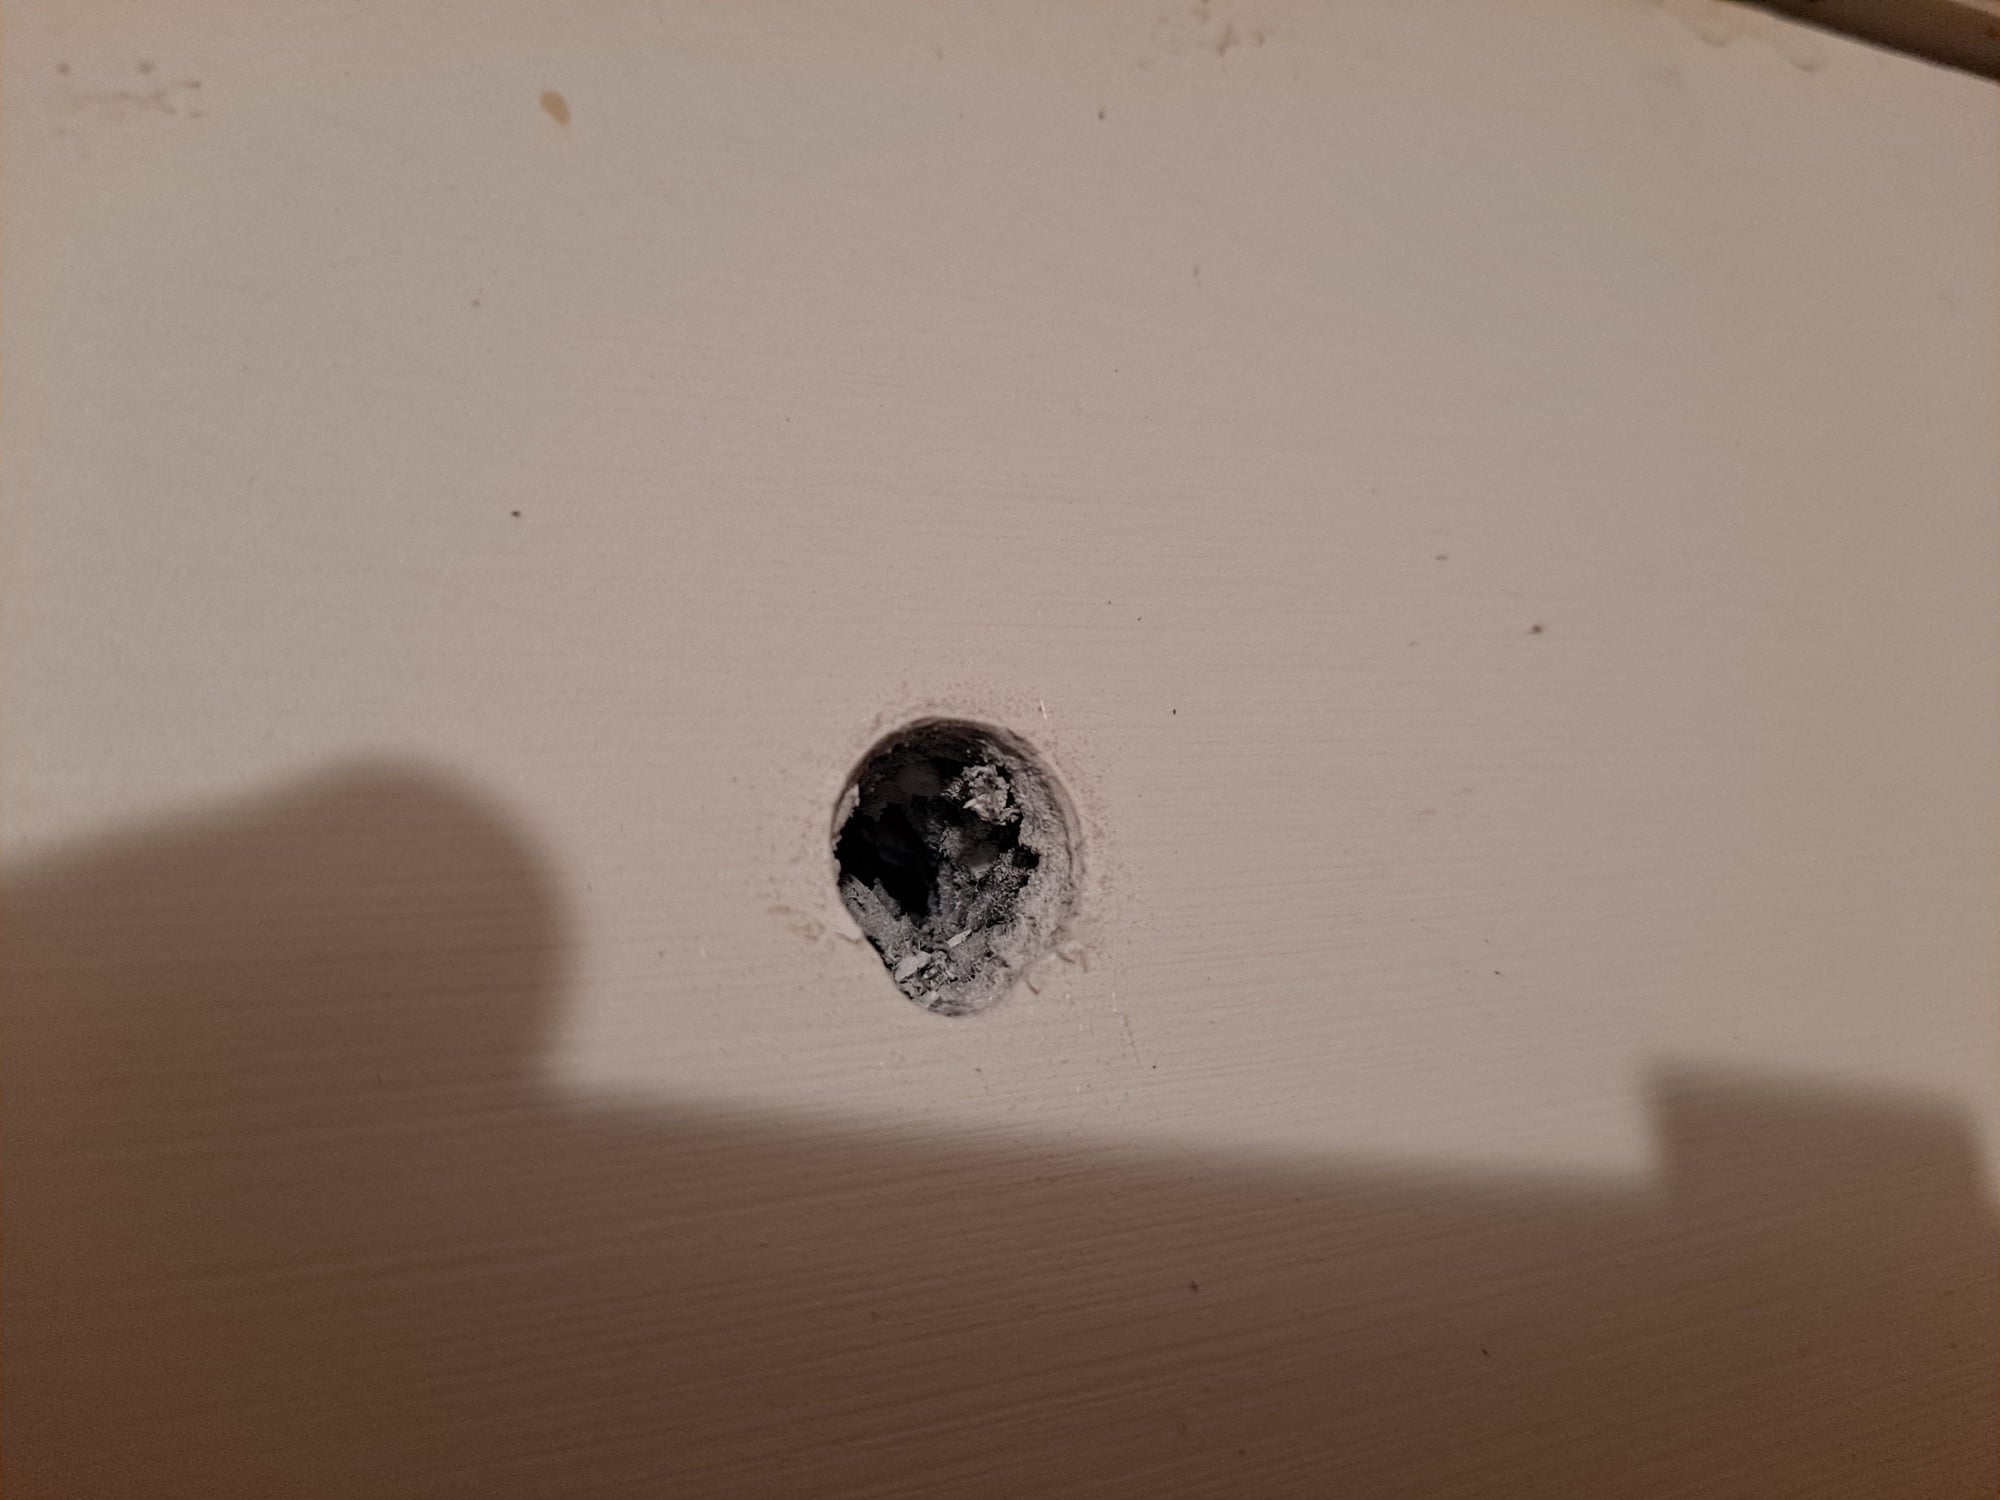 installing a door peep hole